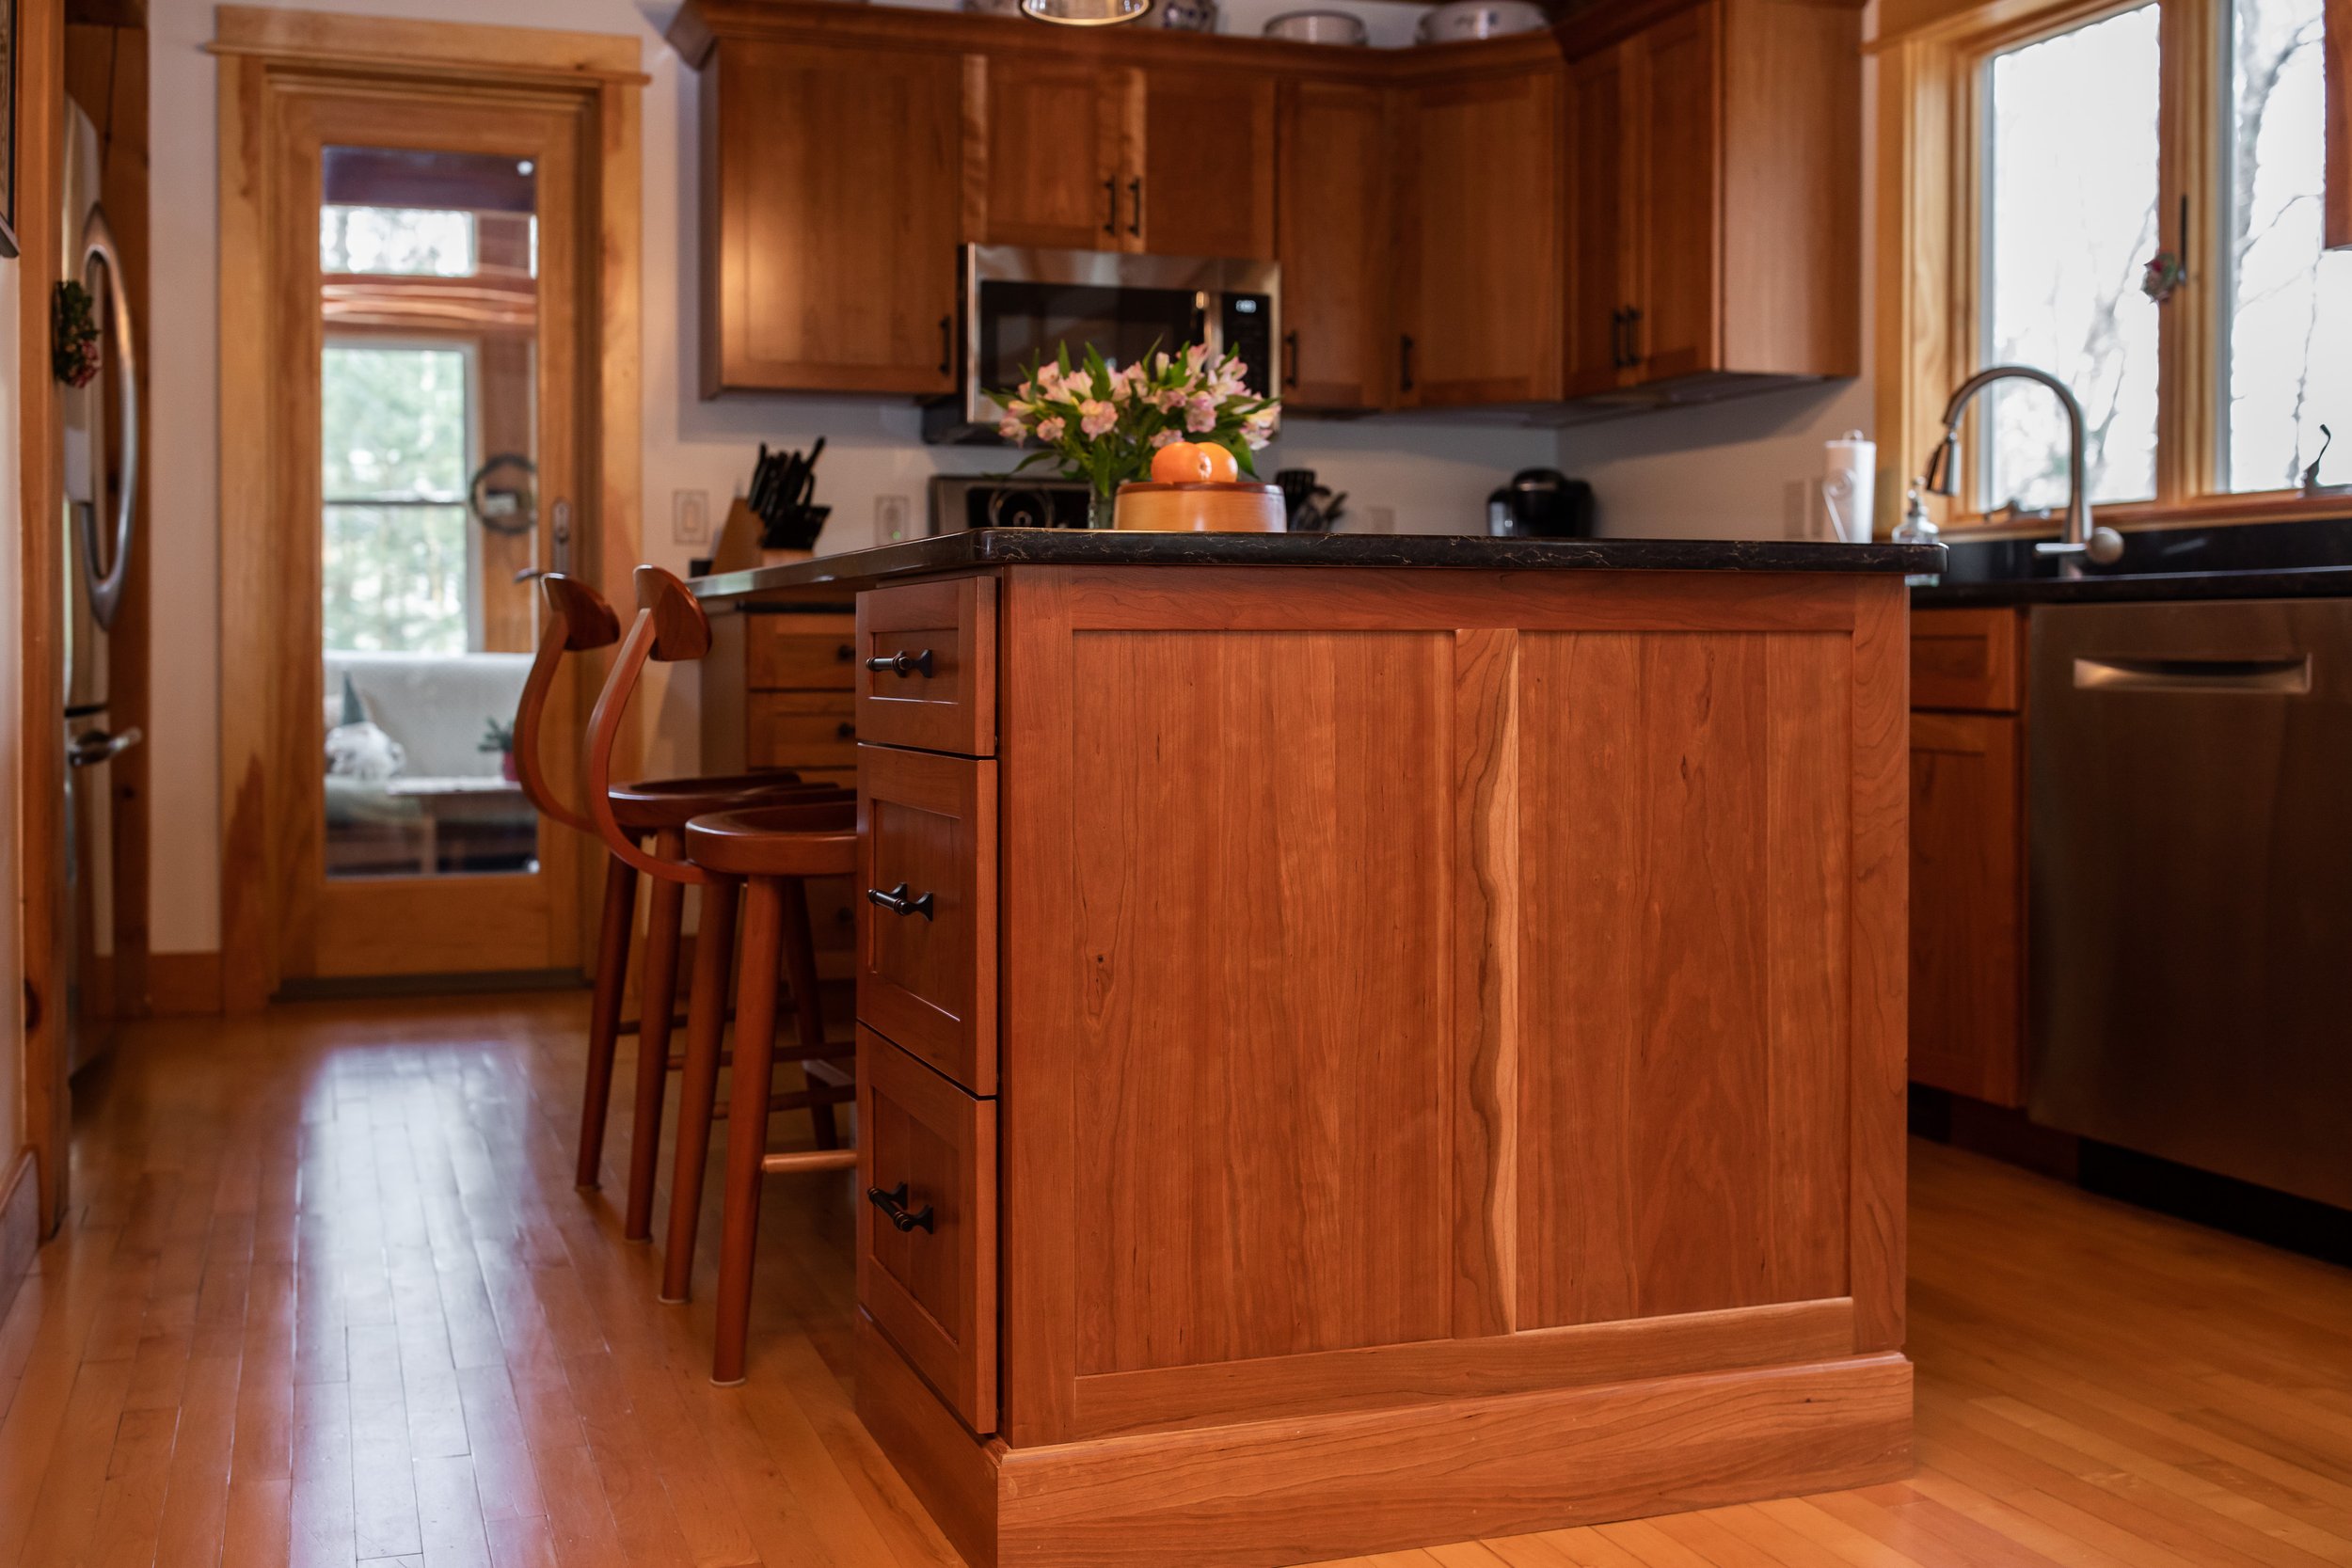 Credible Construction - Barrington New Hampshire Kitchen Renovation67.jpg